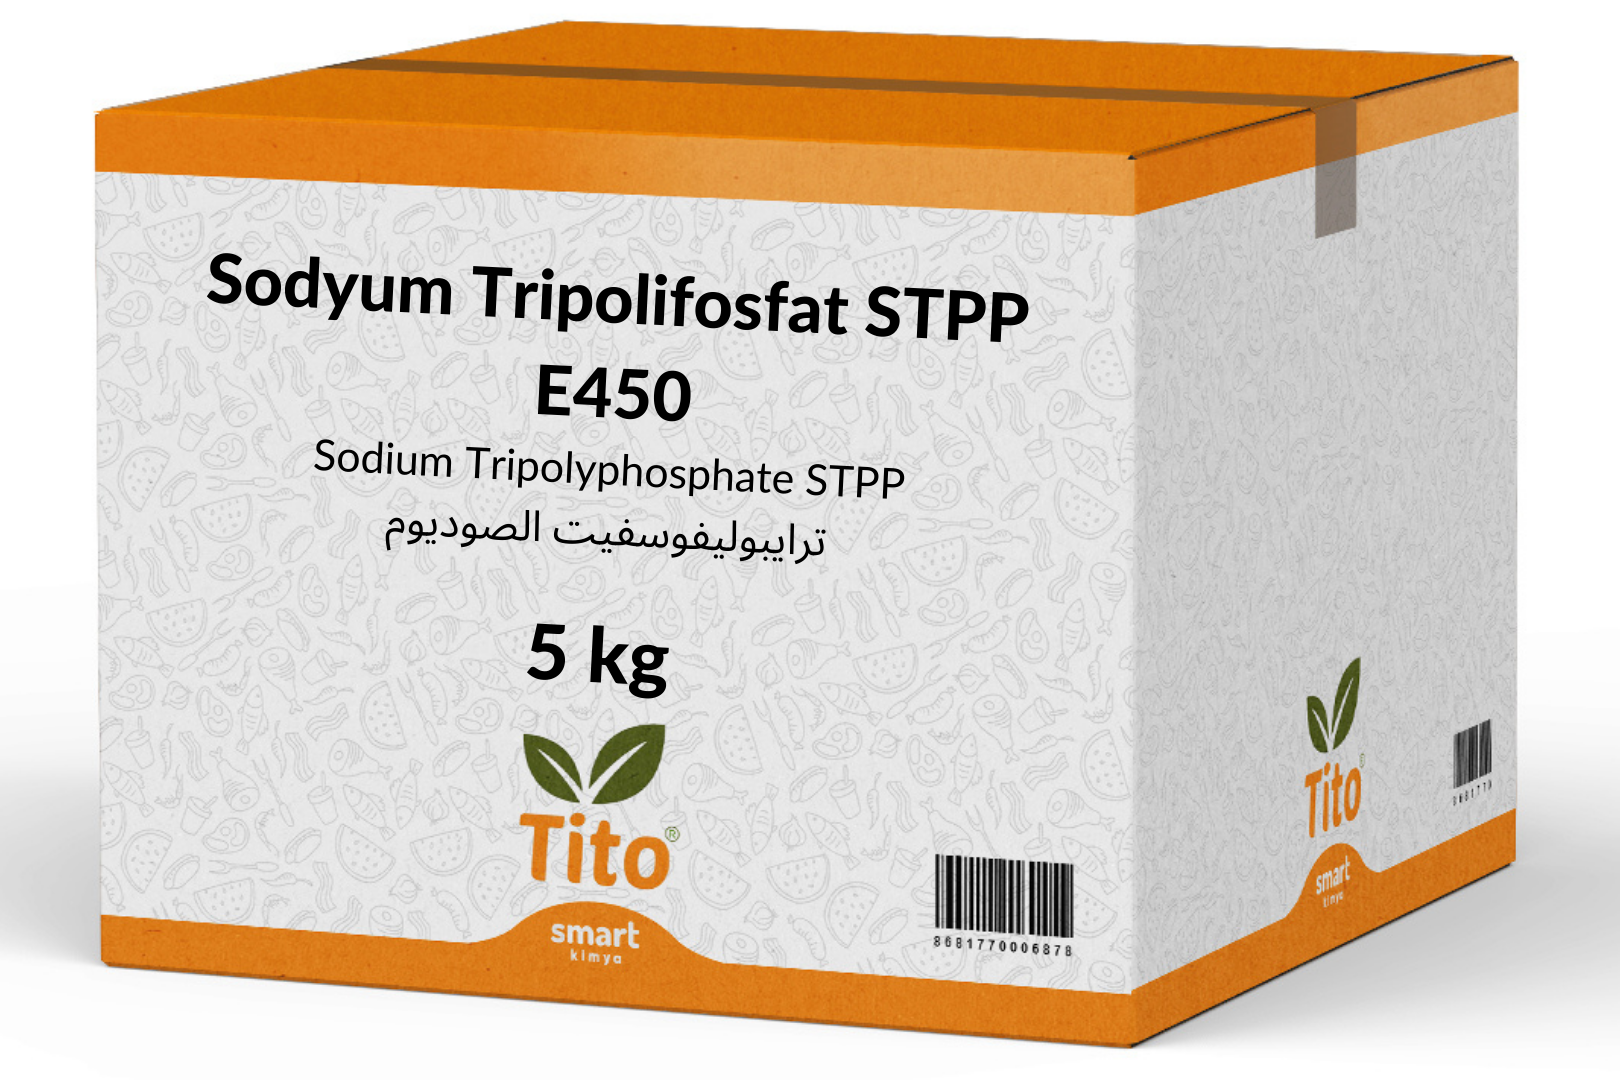 Sodyum Tripolifosfat STPP E450 5 kg